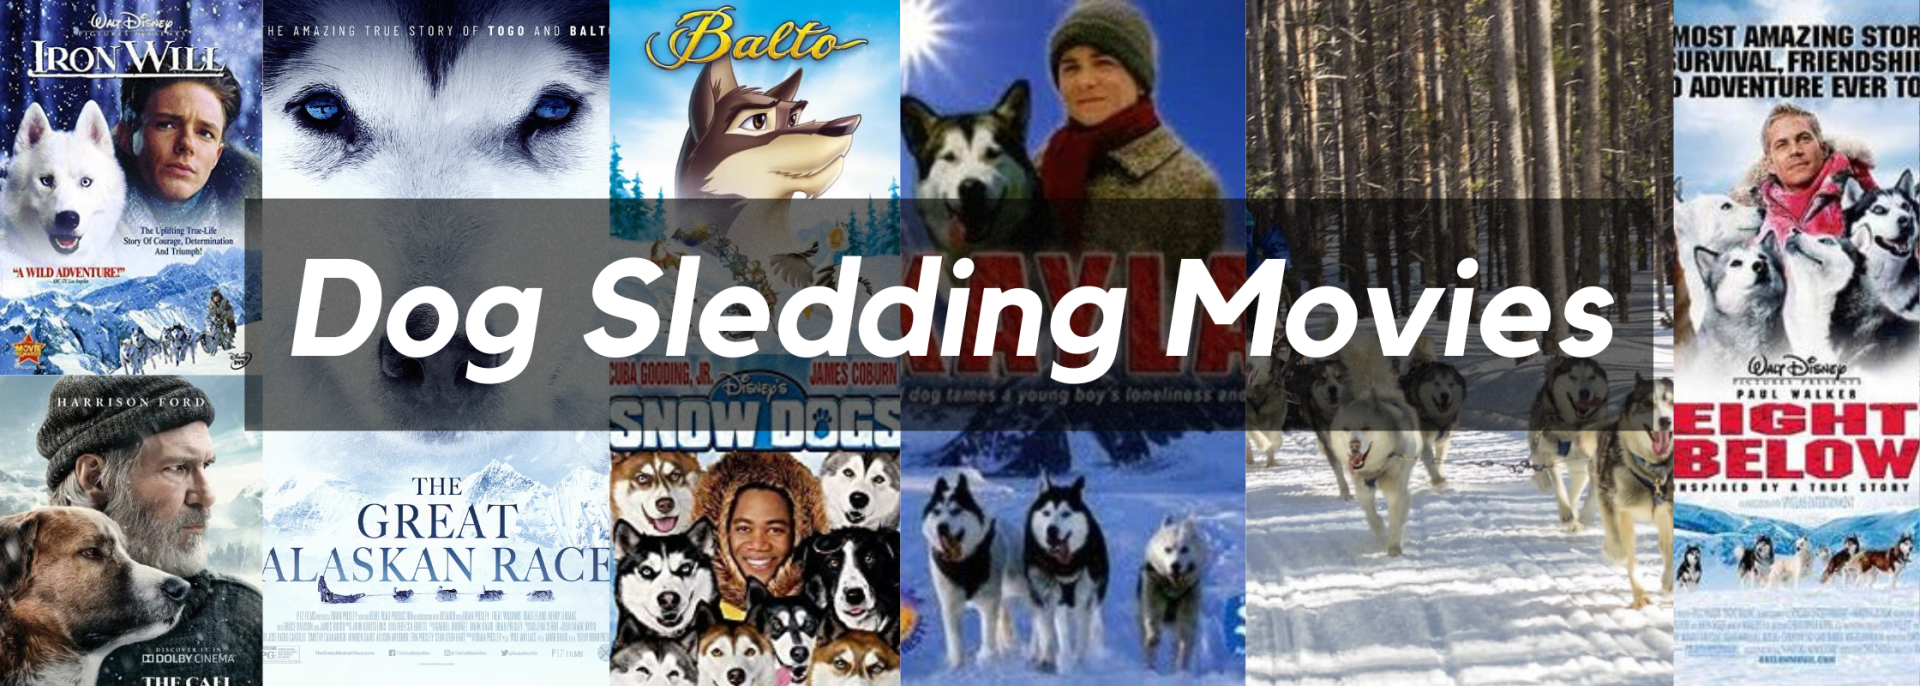 Dog Sledding Movies